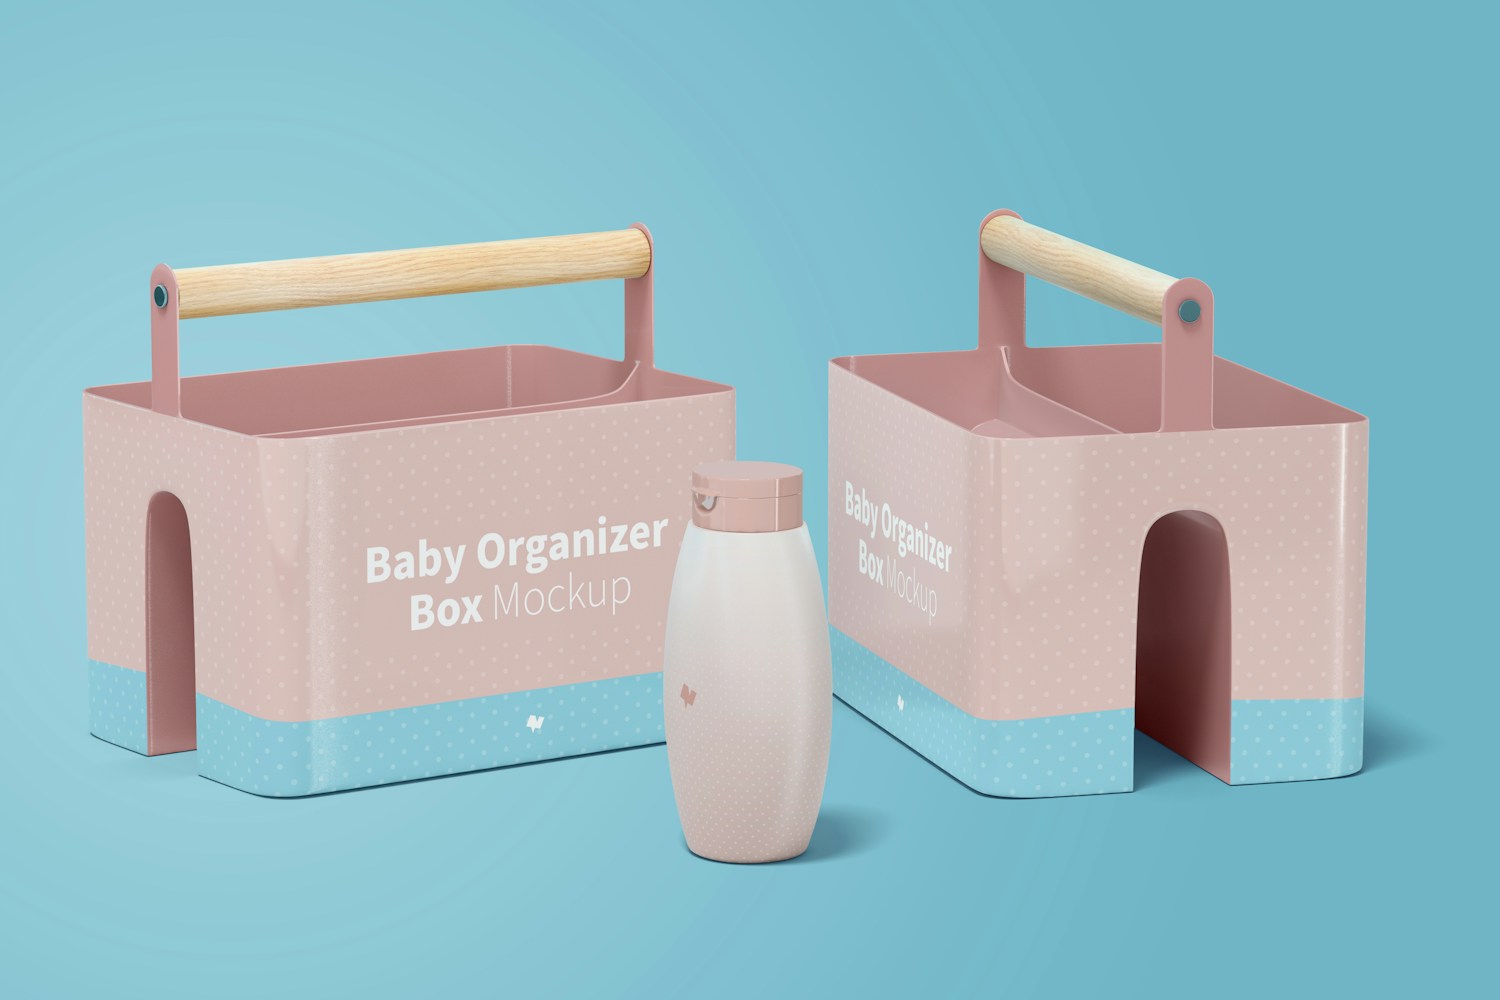 Baby Organizer Box Mockup, Perspective